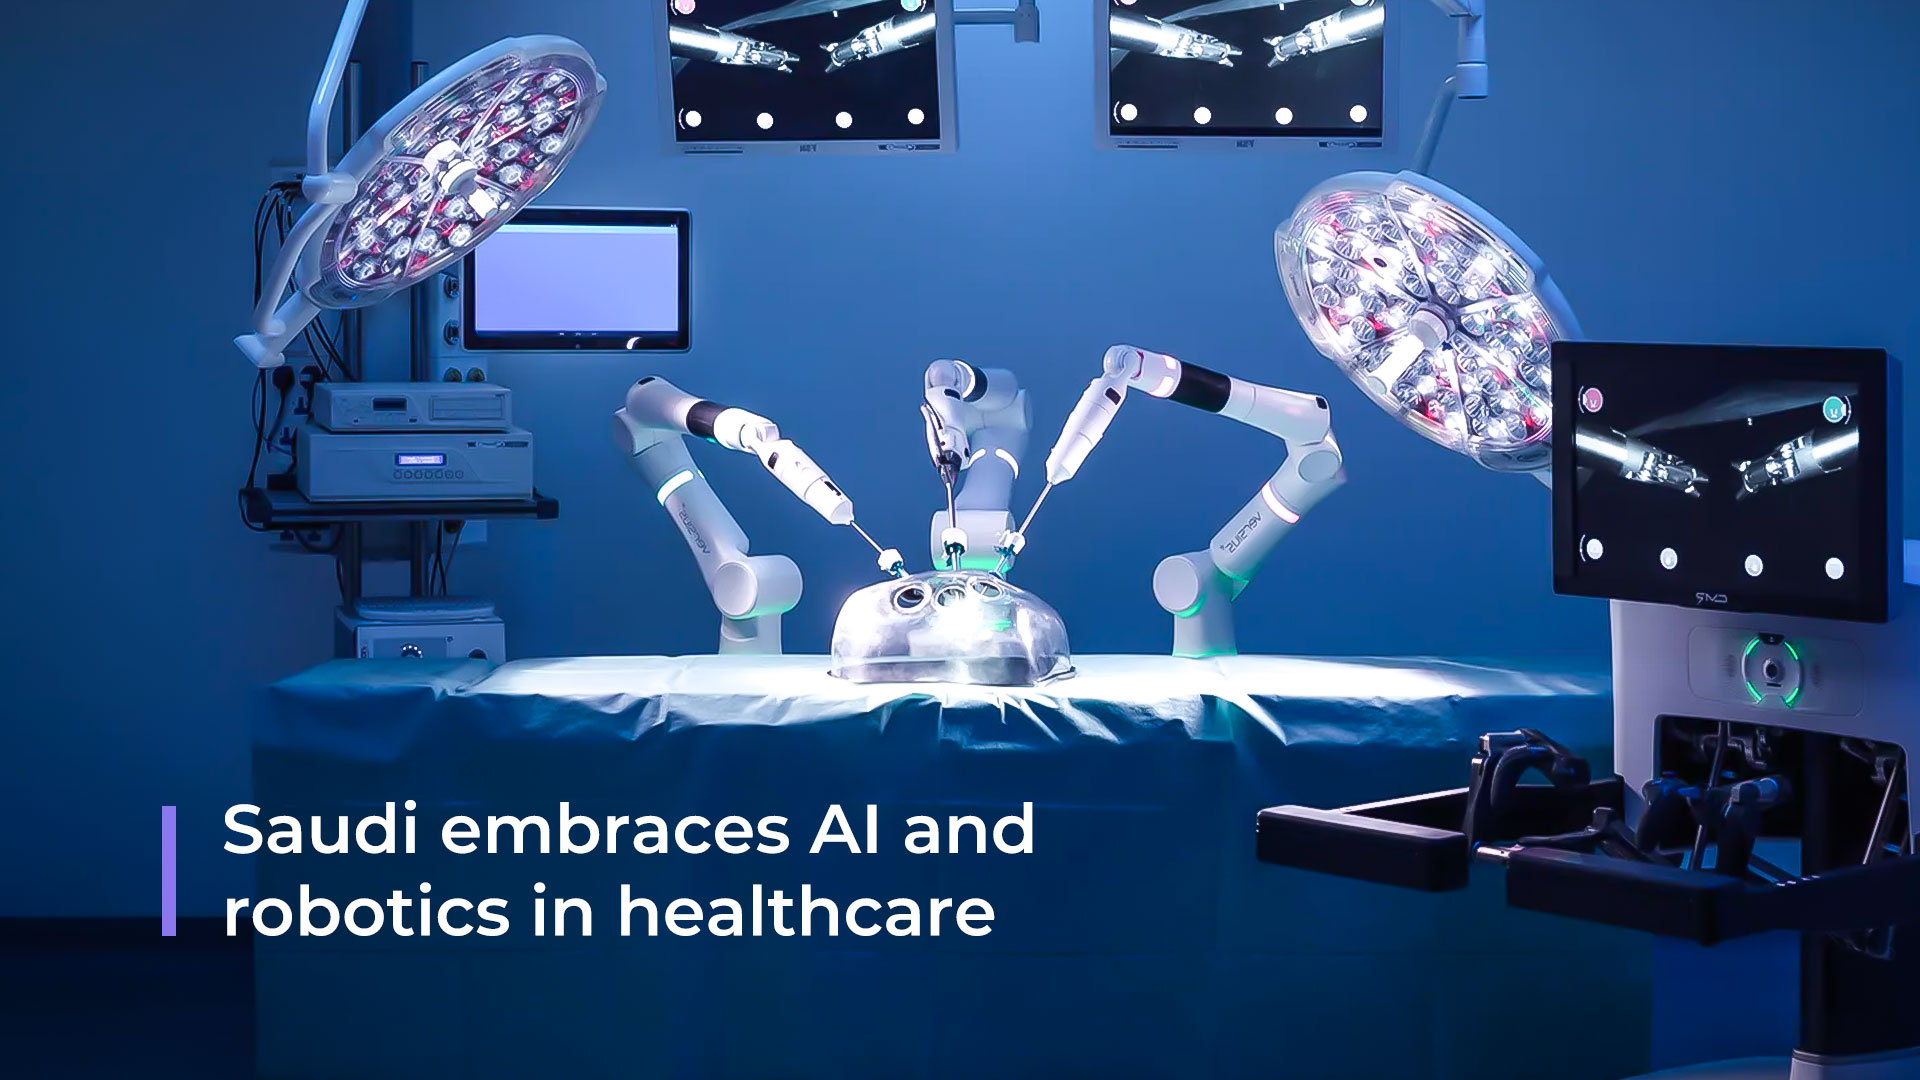 Saudi embraces AI and robotics in healthcare